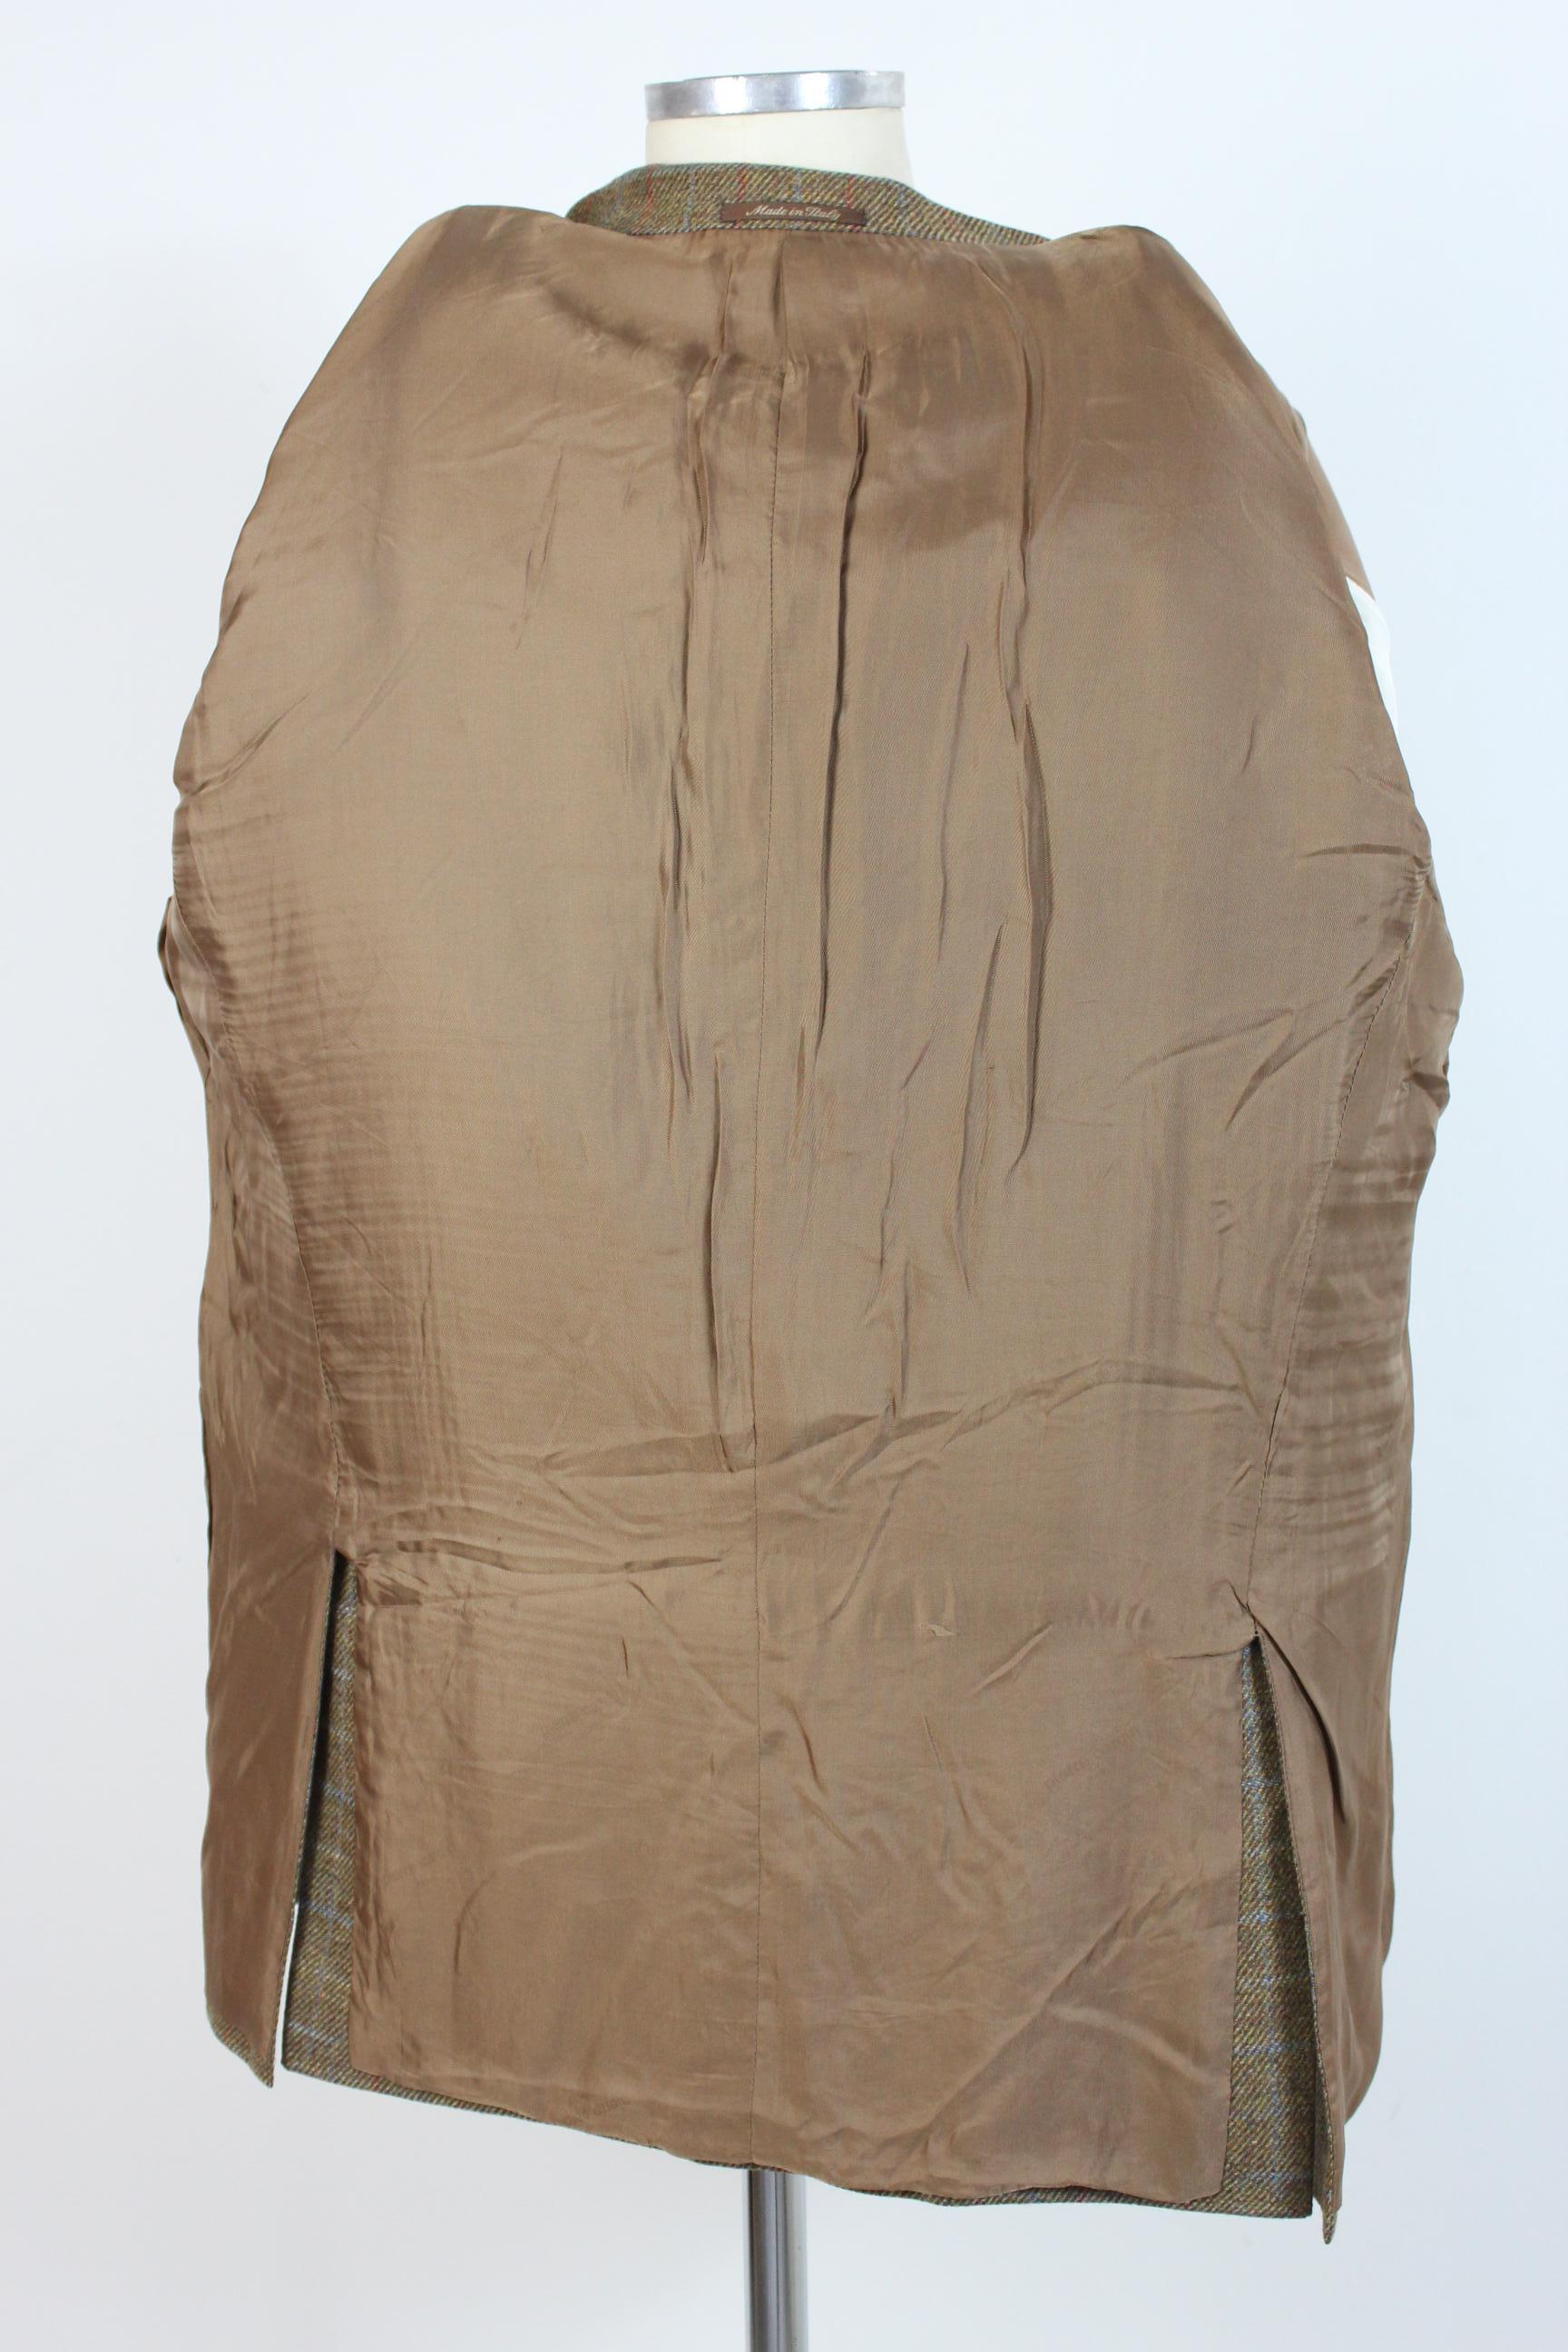 Pierre Cardin Harris Tweed Beige Wool Classic Jacket 1980s 1